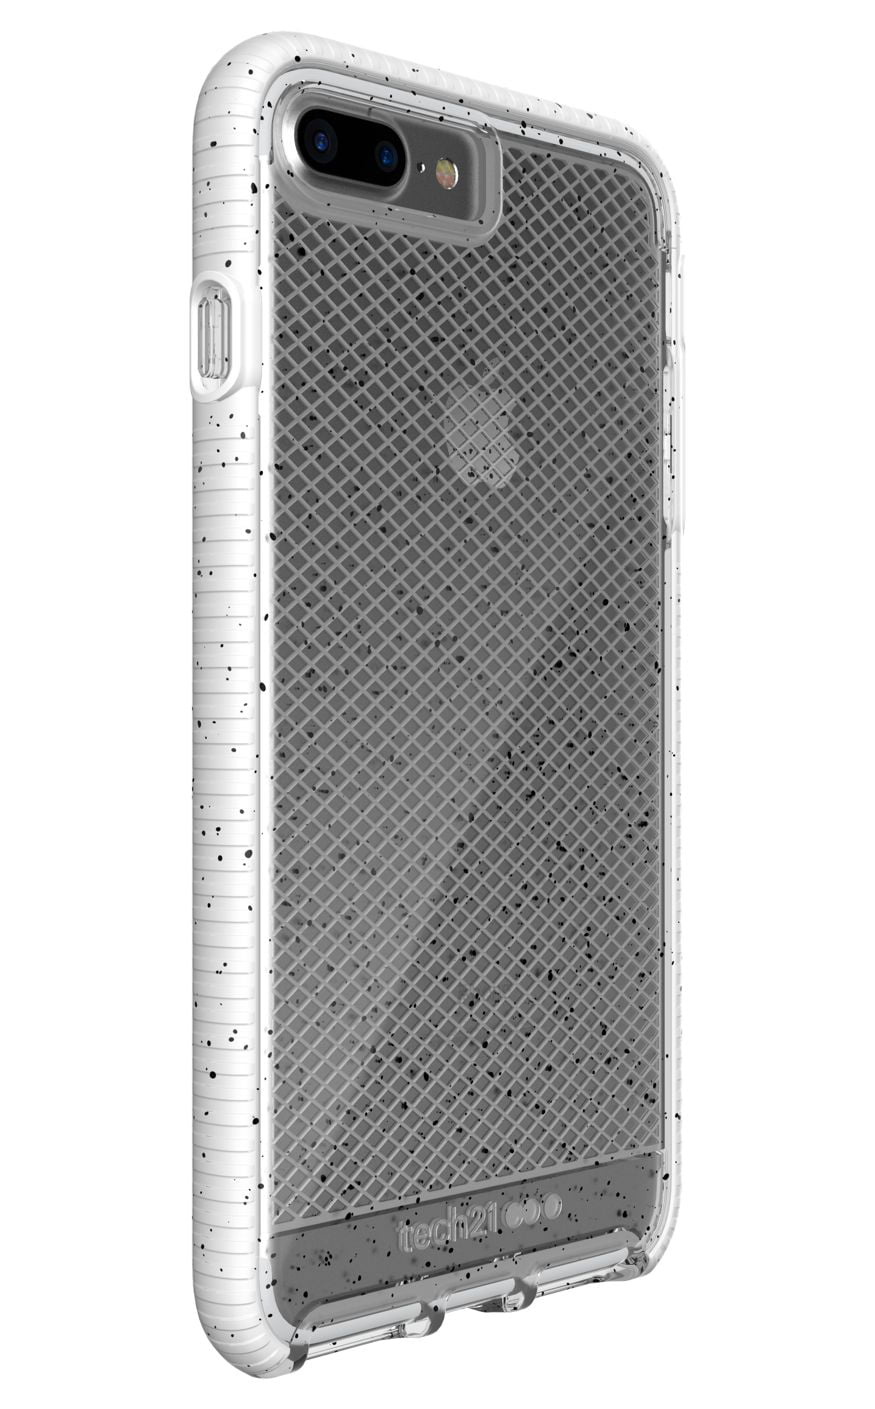 Tech21 Evo Check Active Edition Case - iPhone 7 Plus - Clear/White Spots